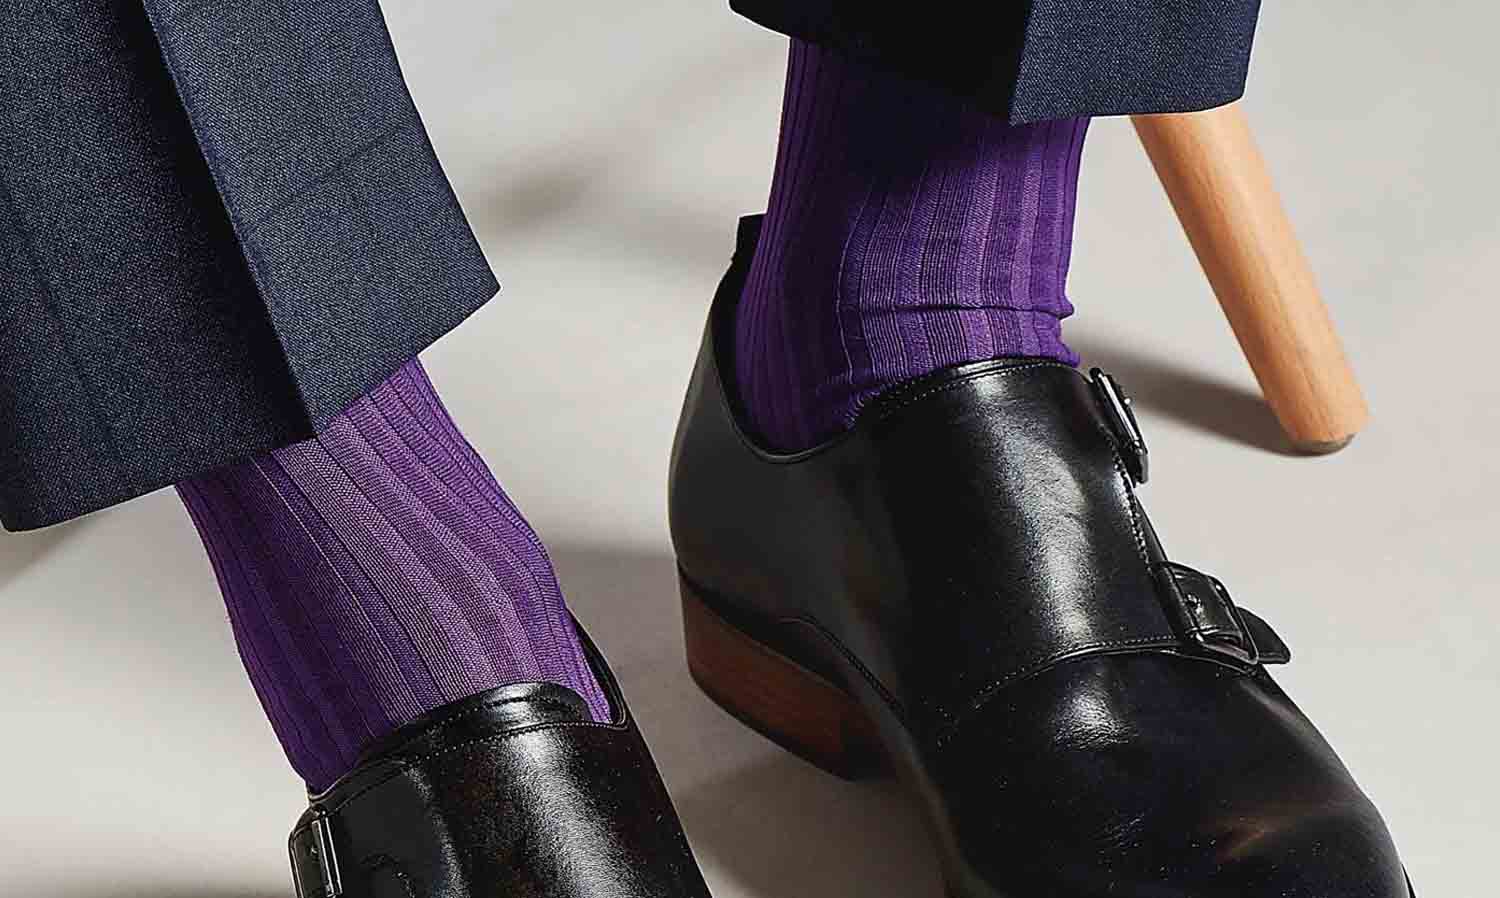 pantherella danvers cotton dress socks